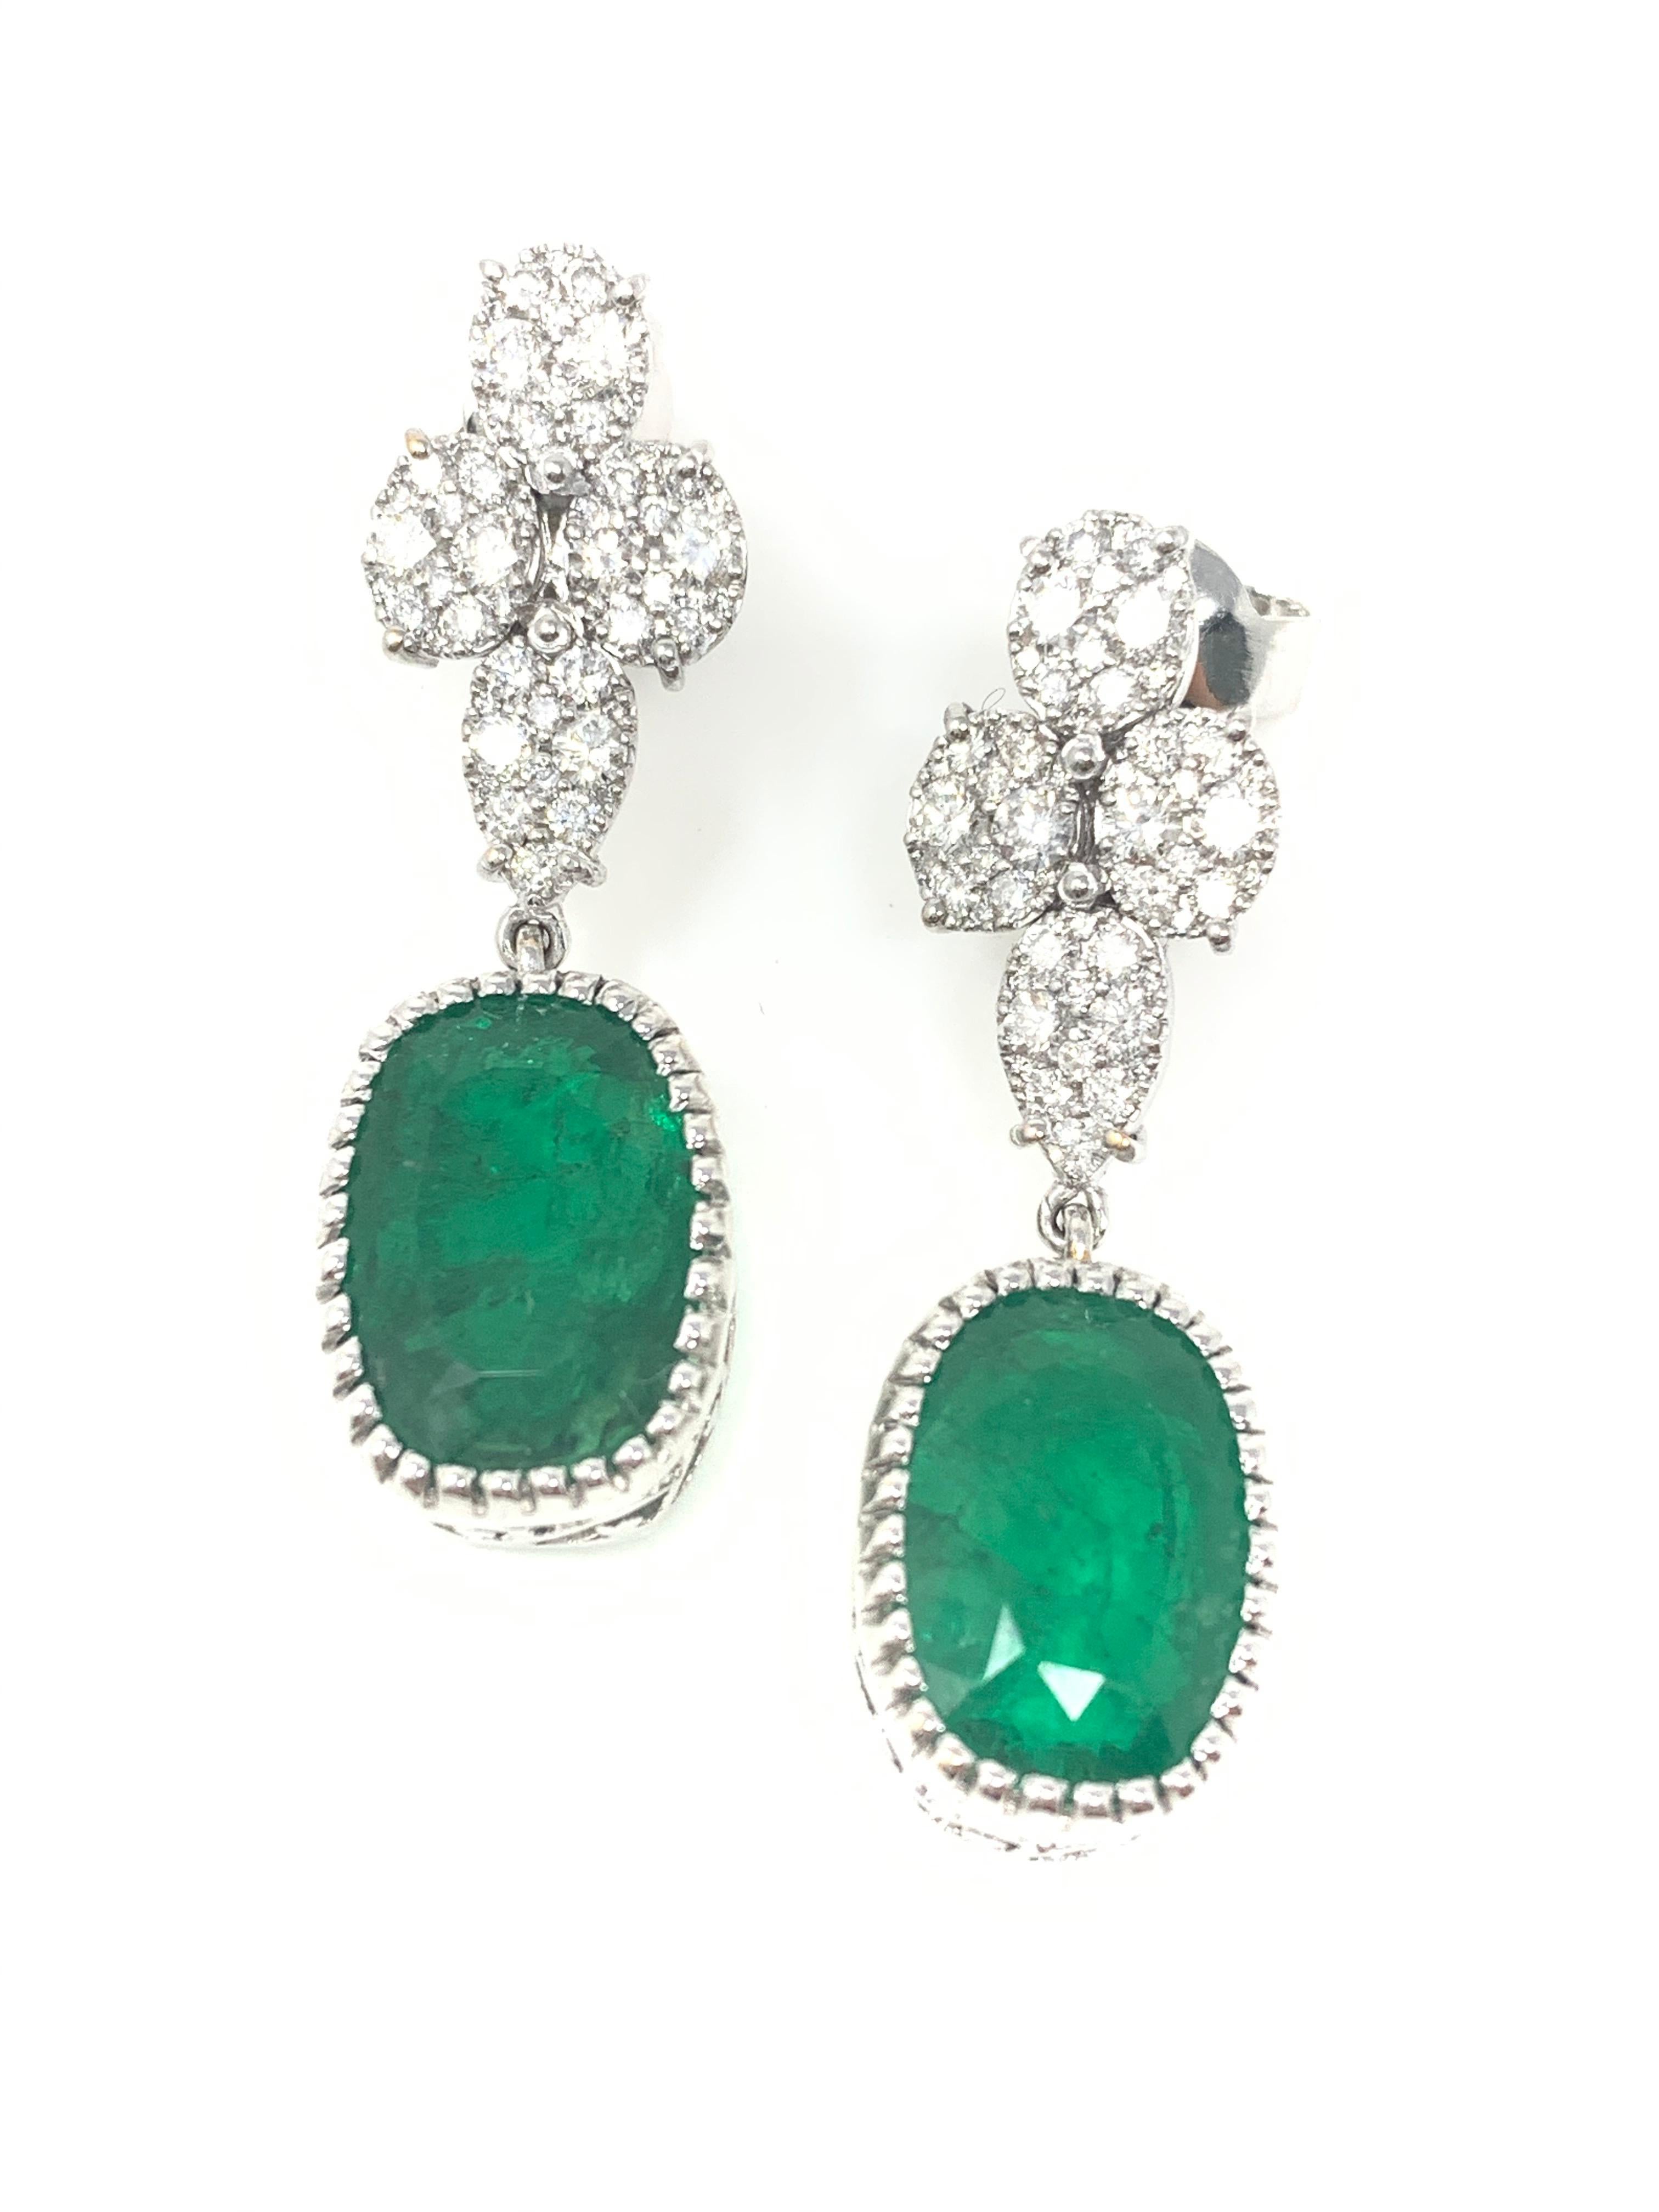 Moguldiam Inc Emerald and diamond dangle earrings custom handmade in 18k white gold. 

Emerald weight : 15.88 carat 
Diamond weight : 1.50 carat 
Metal : 18 K white gold 
measurements: 1 1/2 inches long